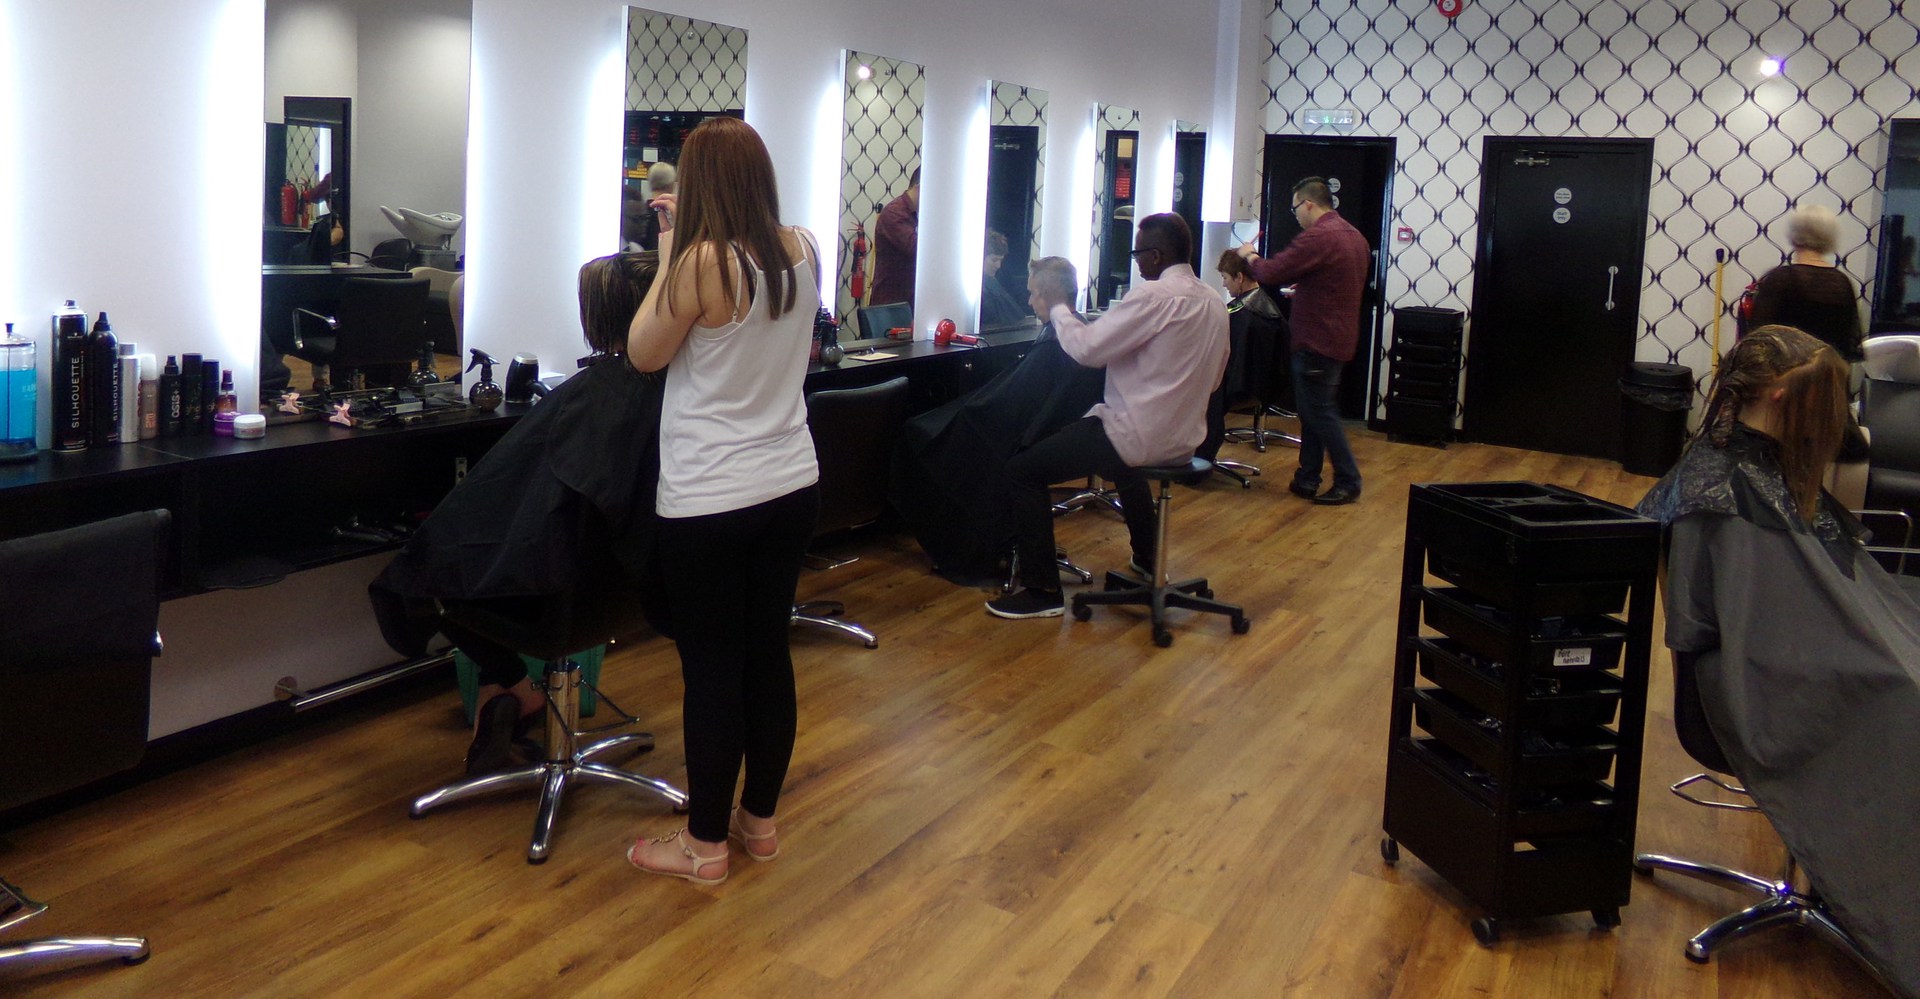 Deesigner Hair Studio, unisex hair salon, in Ipswich town centre - The salon